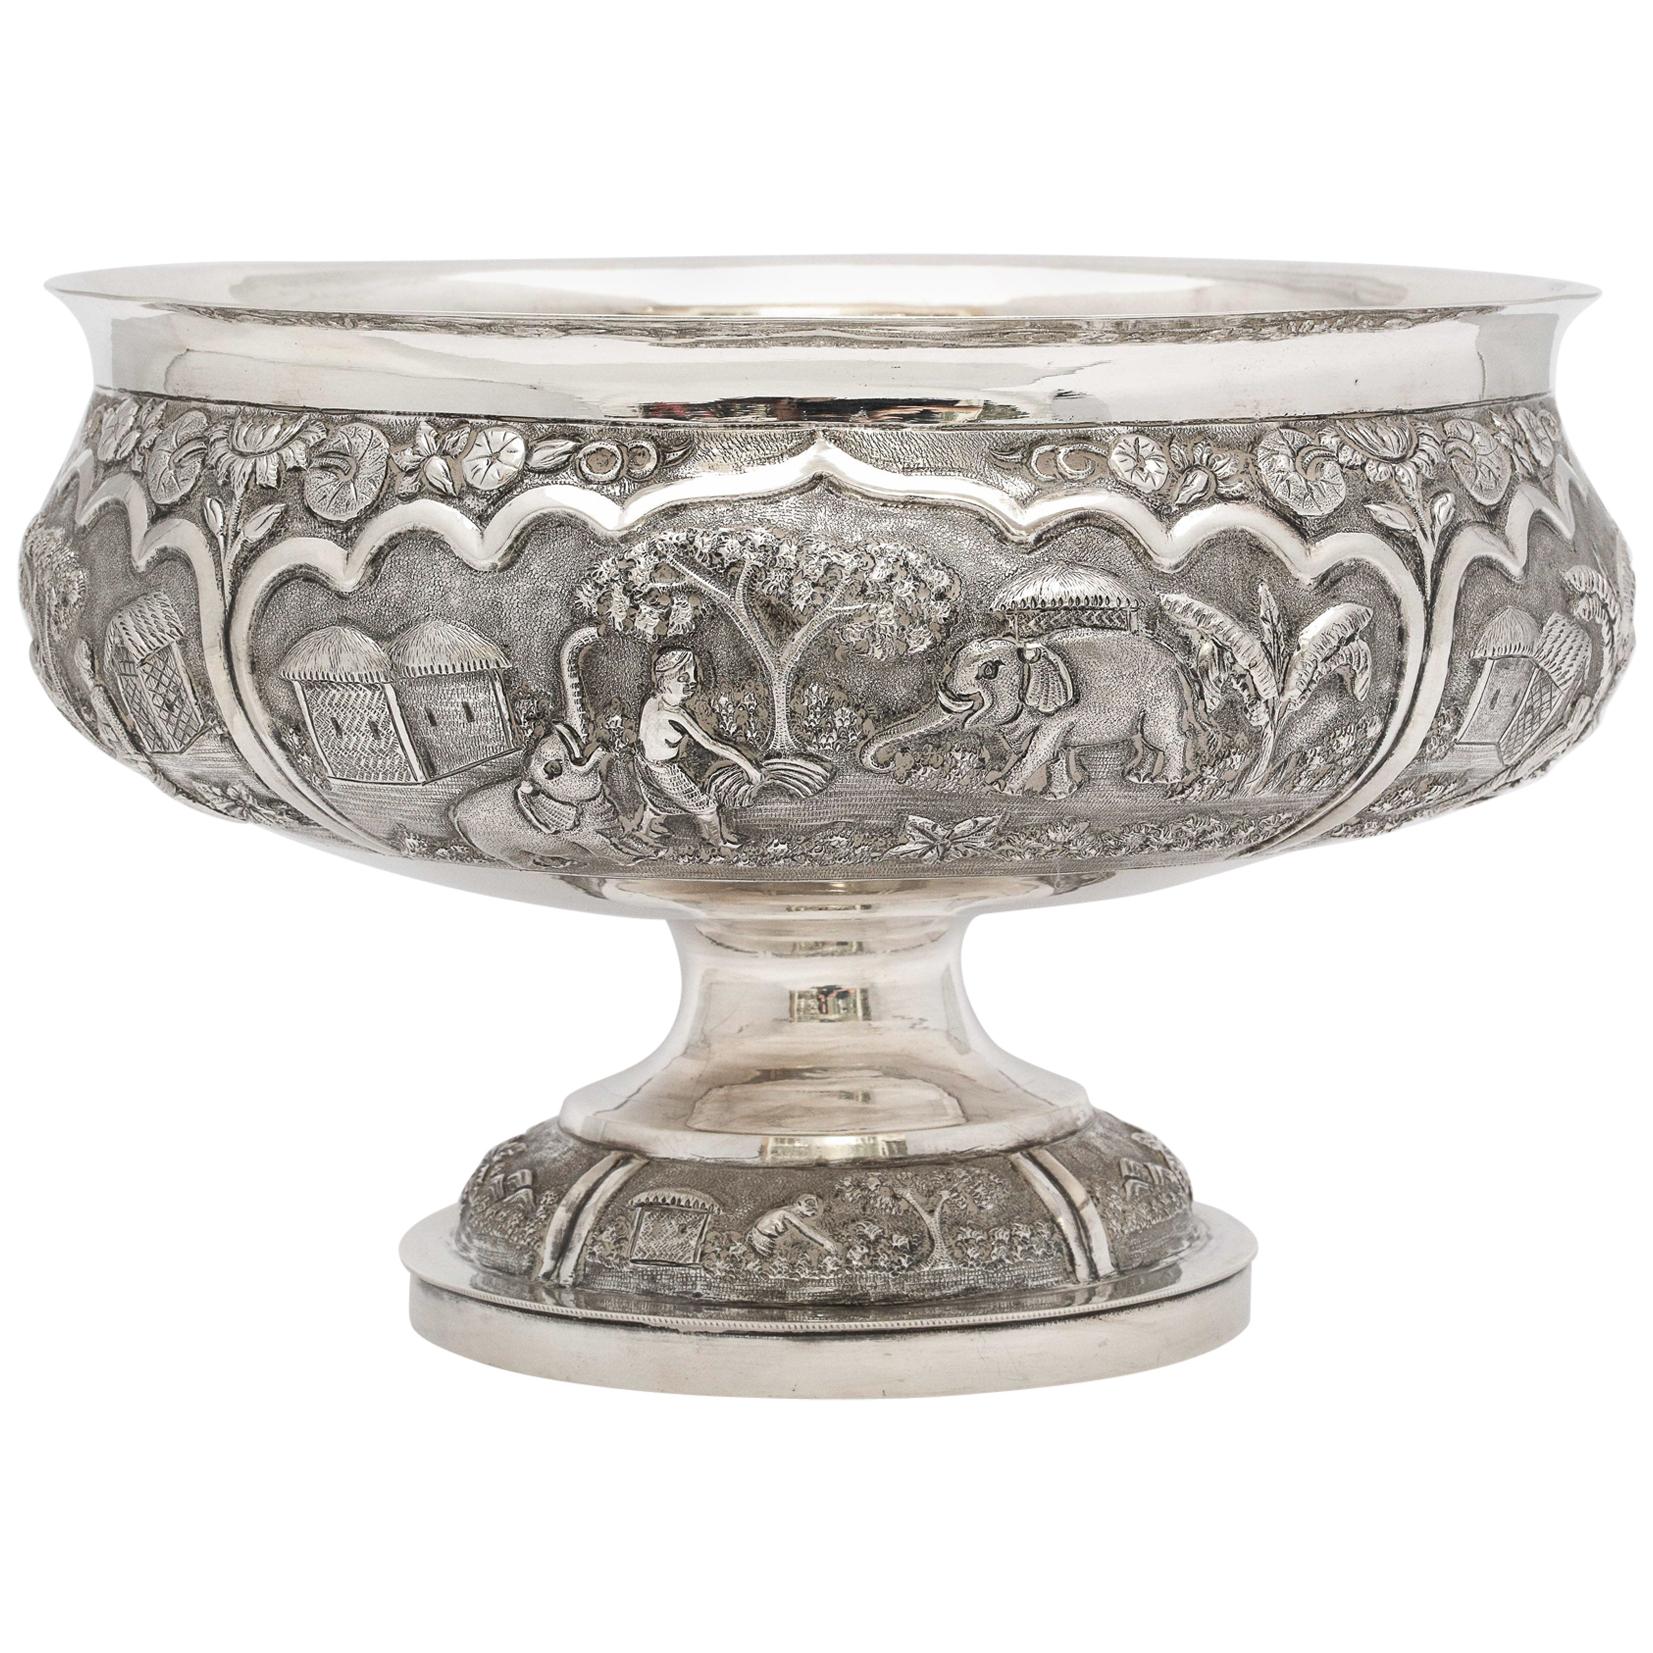 Late 19th Century Burmese/Myanmar Silver Pedestal-Based Bowl